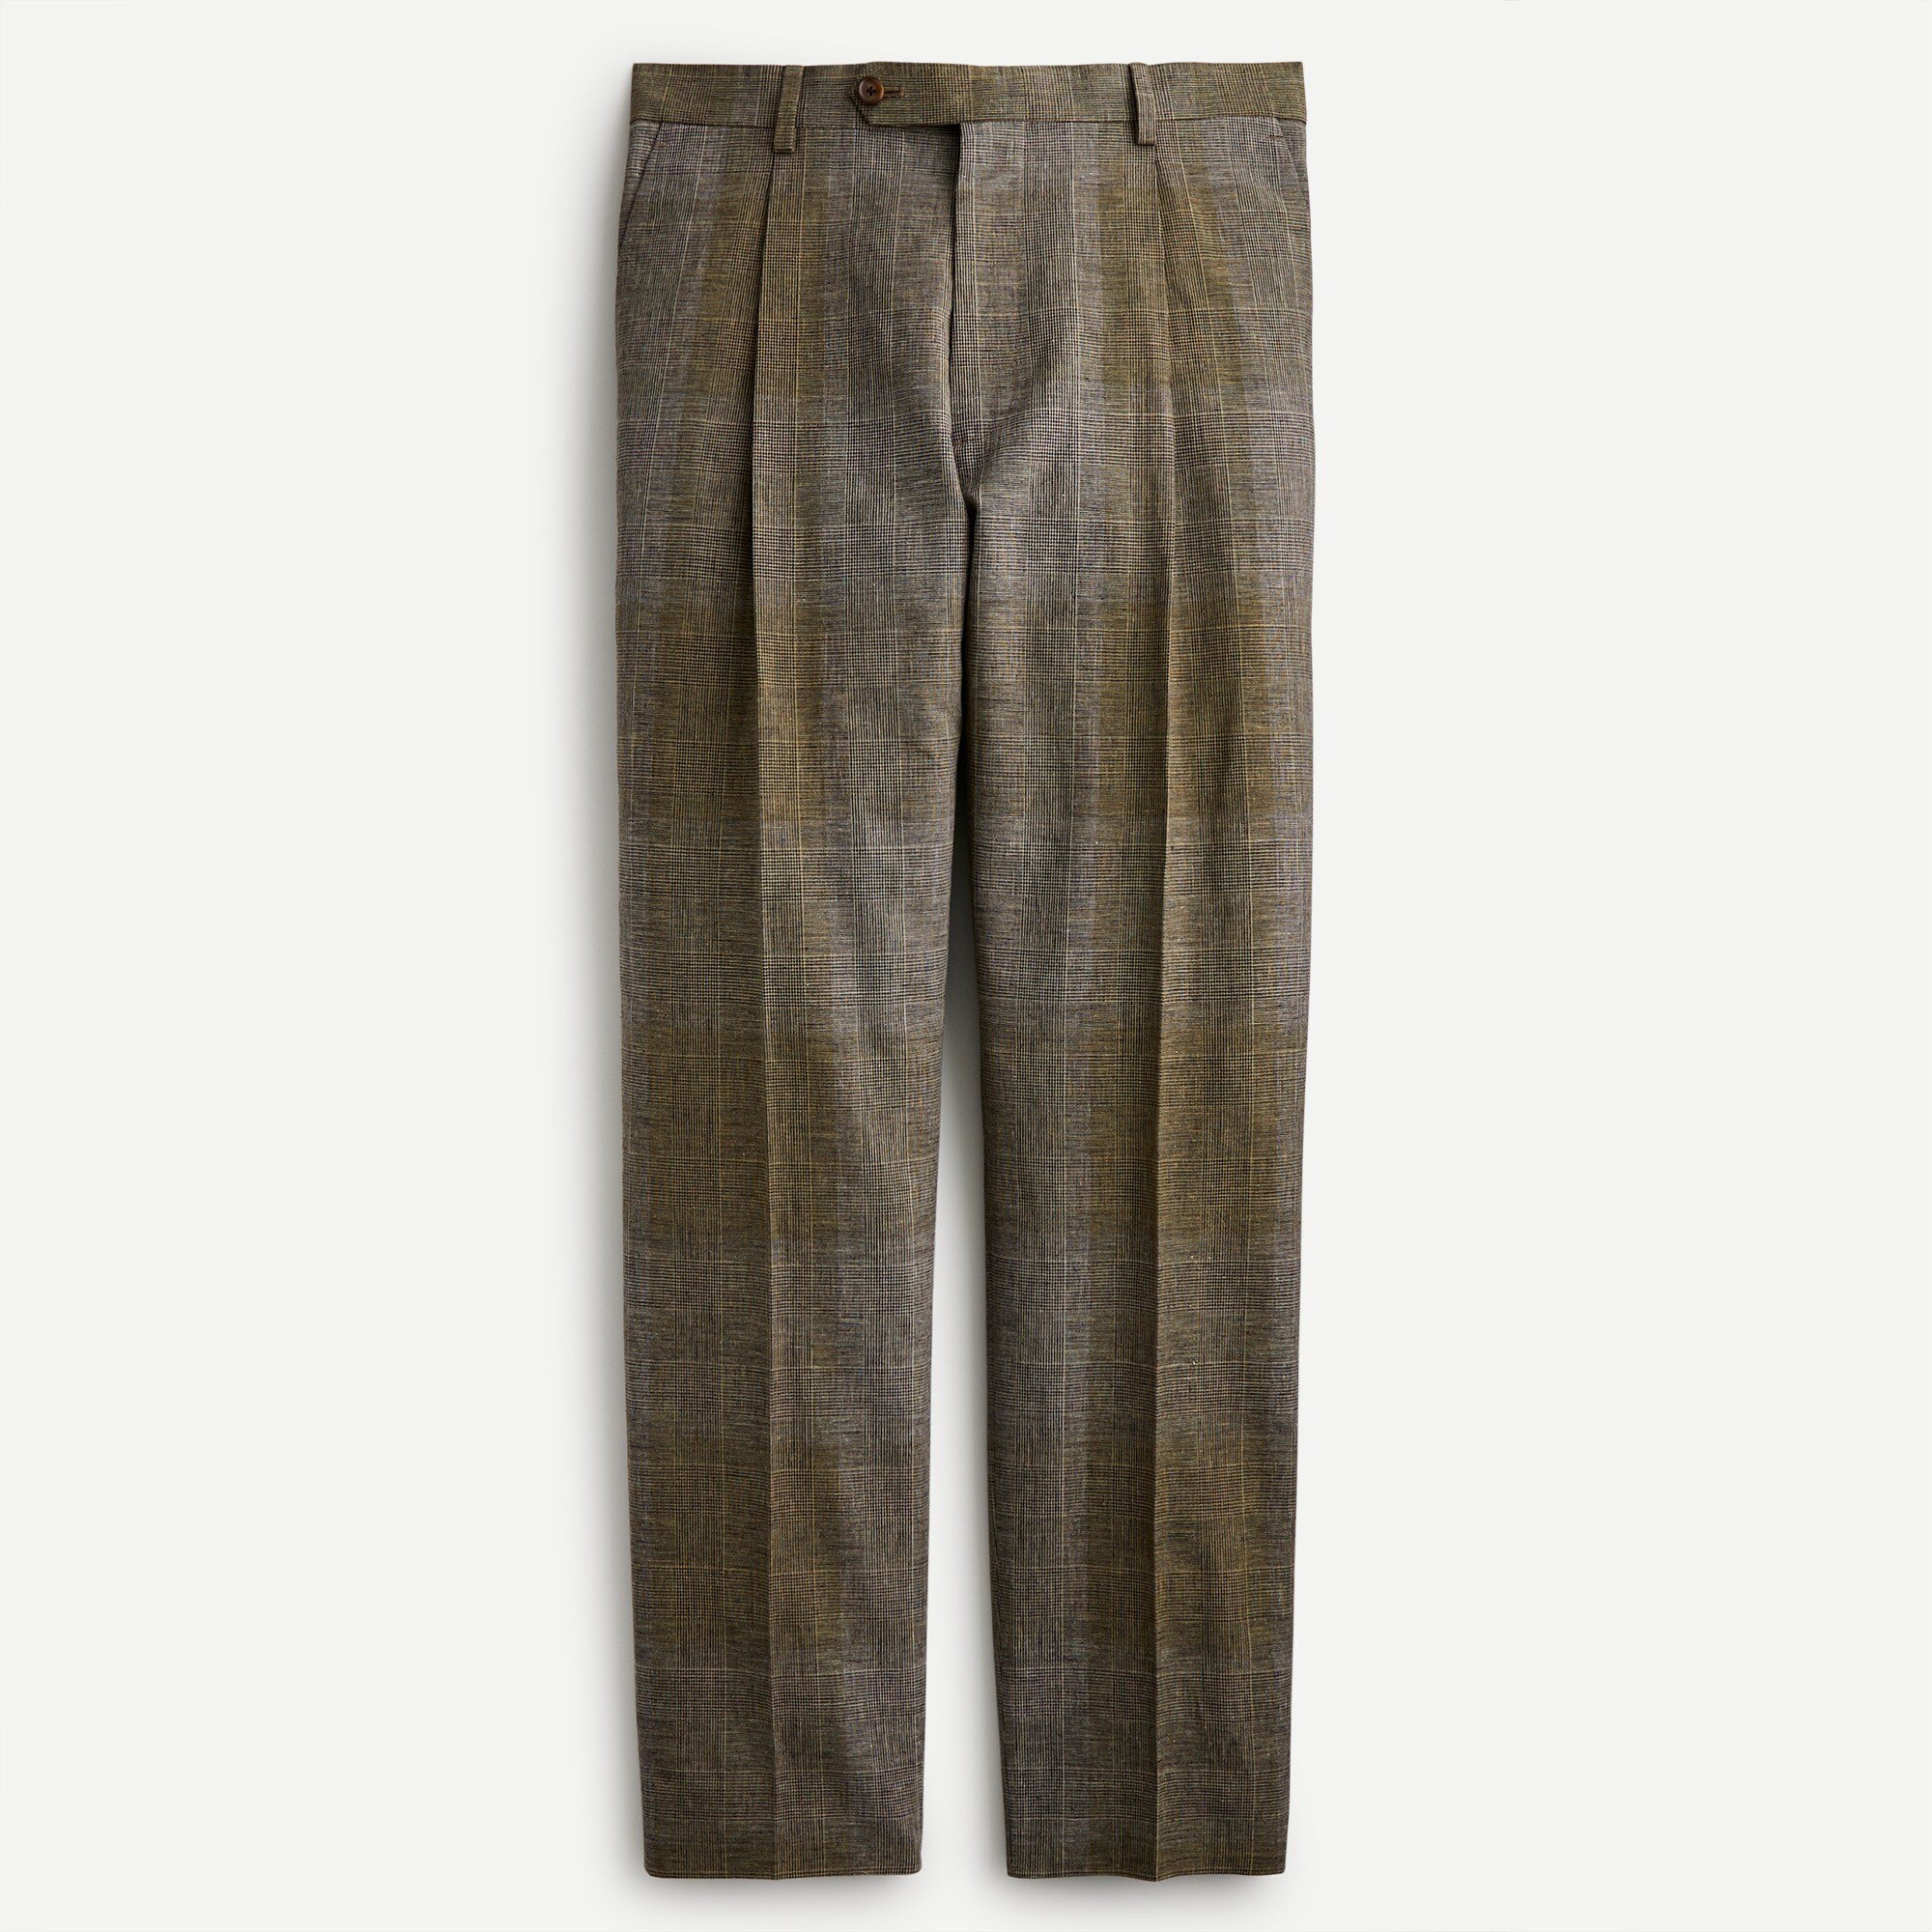  Ludlow Slim-fit suit pant in Japanese cotton-linen